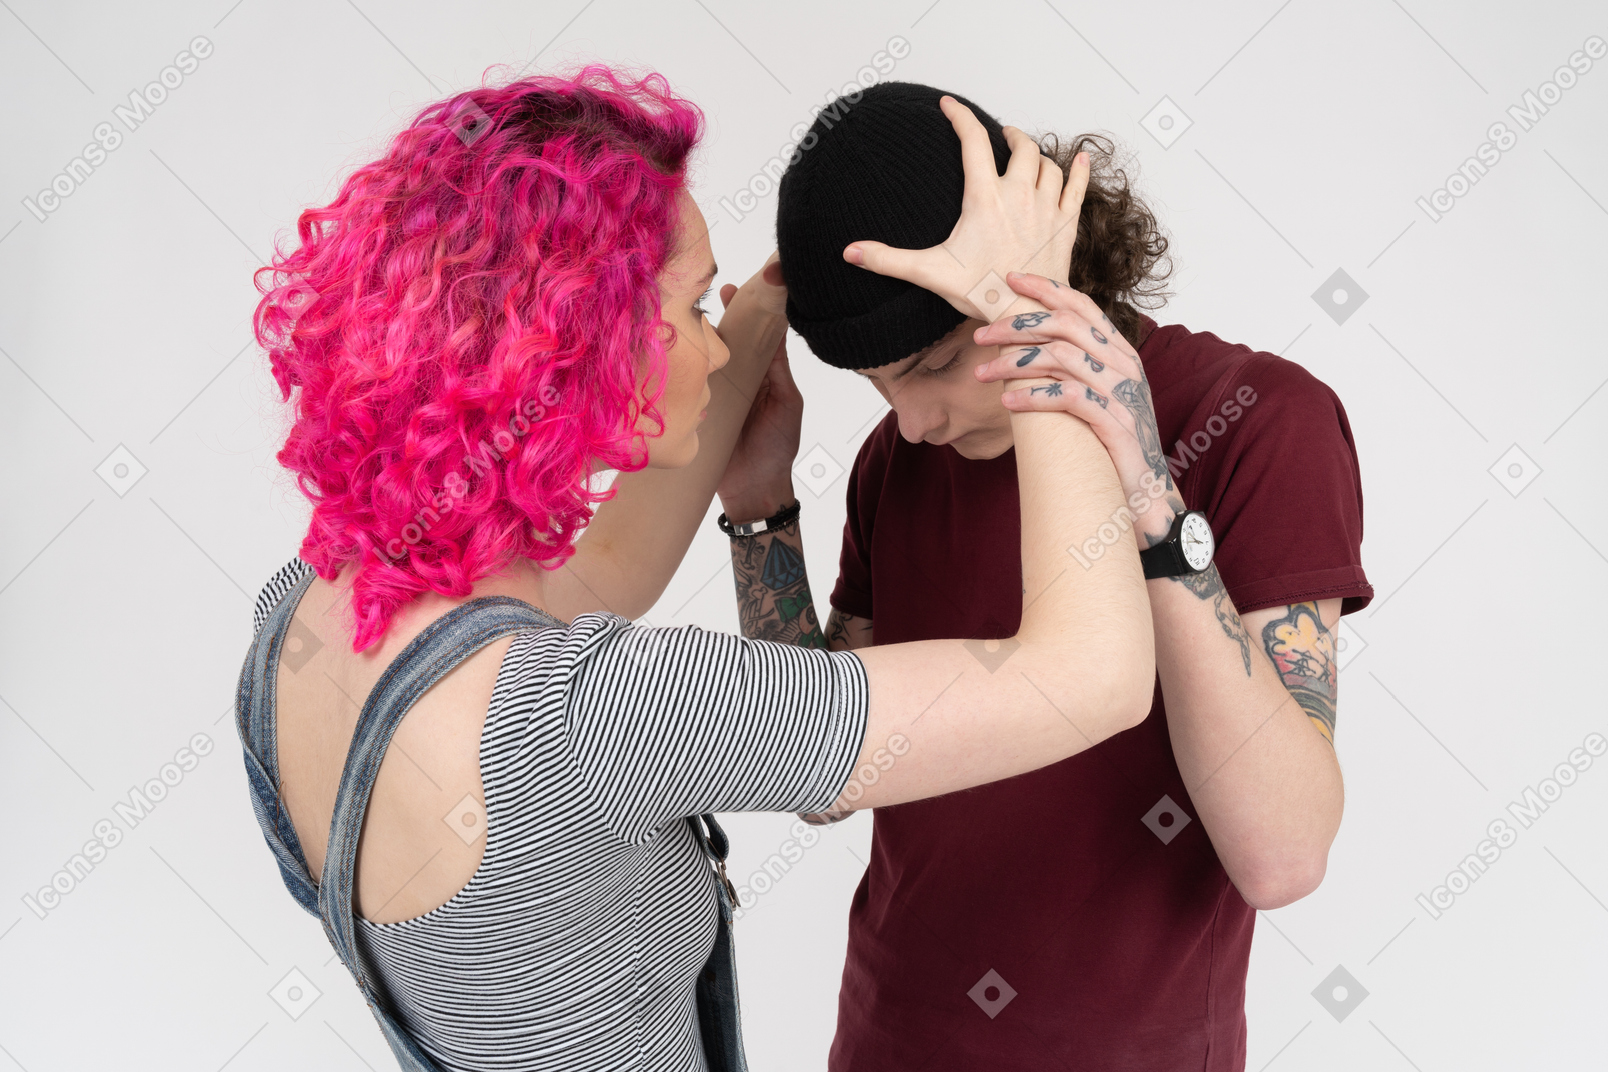 Pink-haired girl putting black hat on her boyfriend